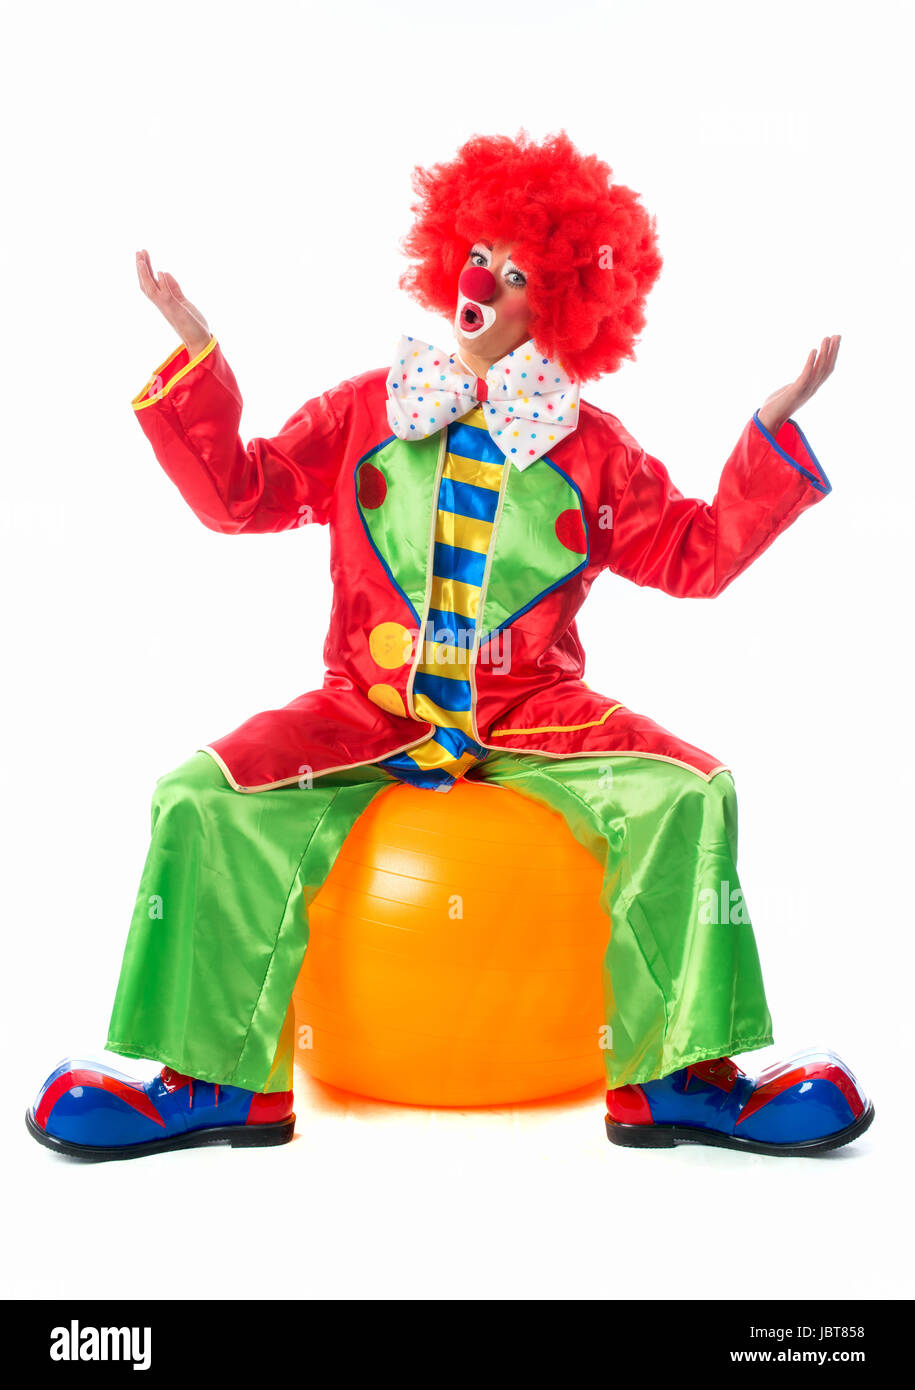 clown sitting on exercise ball Stock Photo